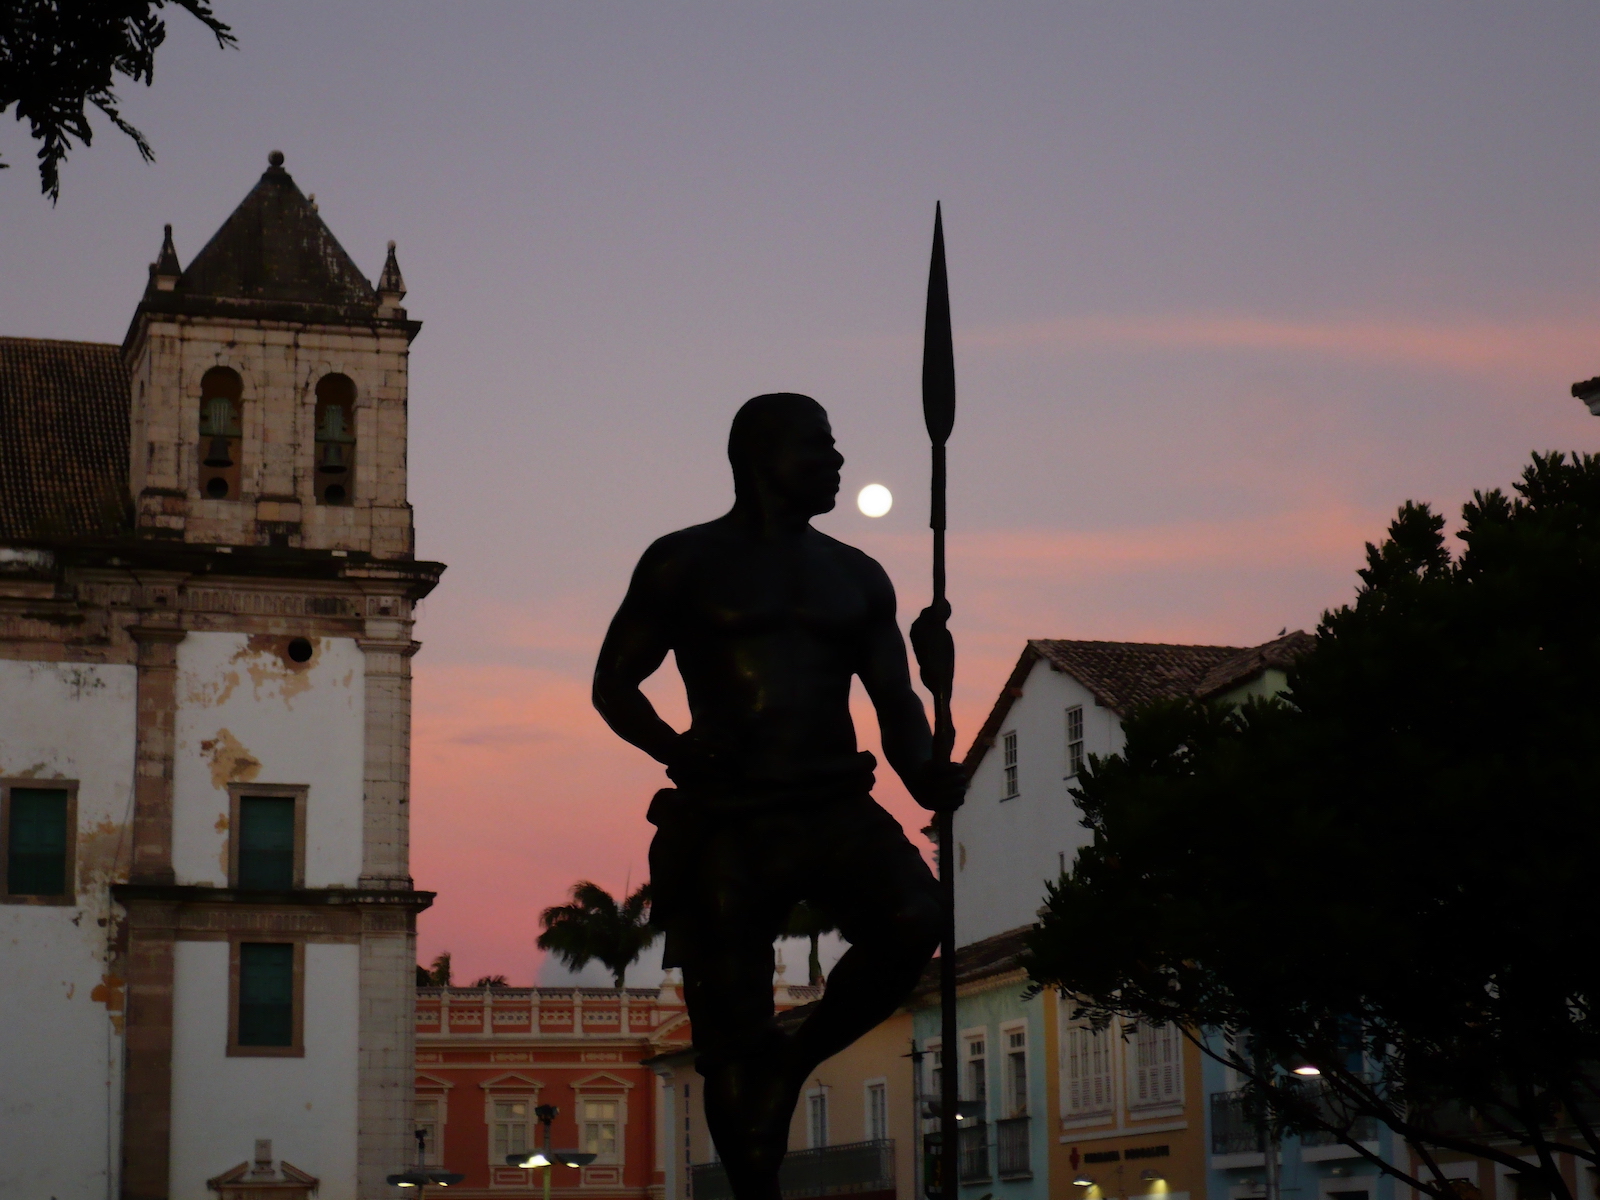 A statue of Zumbi dos Palmares, in Alagoas, Brazil. Photograph by Gorivero (CC BY-SA 3.0).